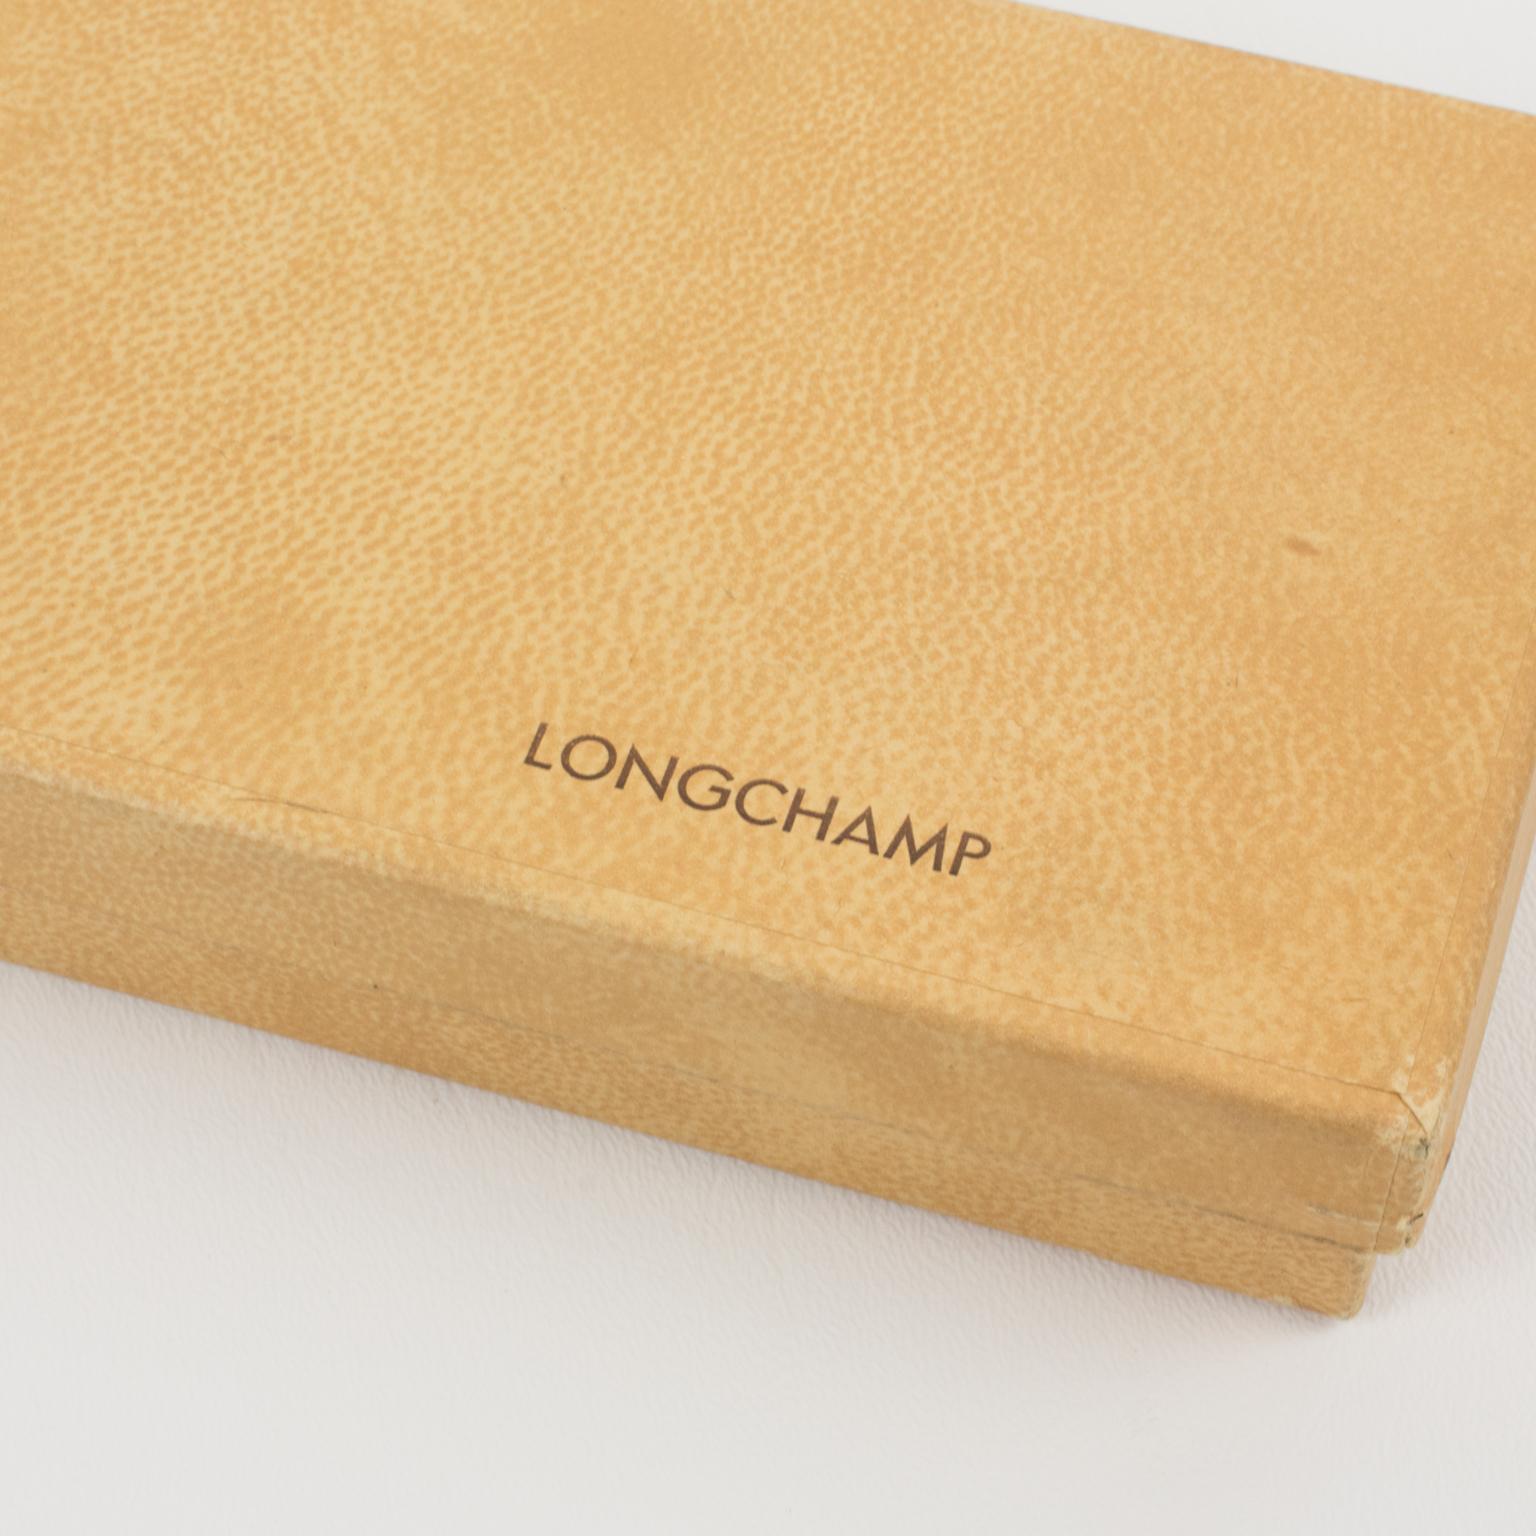 Longchamp 1940s Stitched Leather Desk Set 4